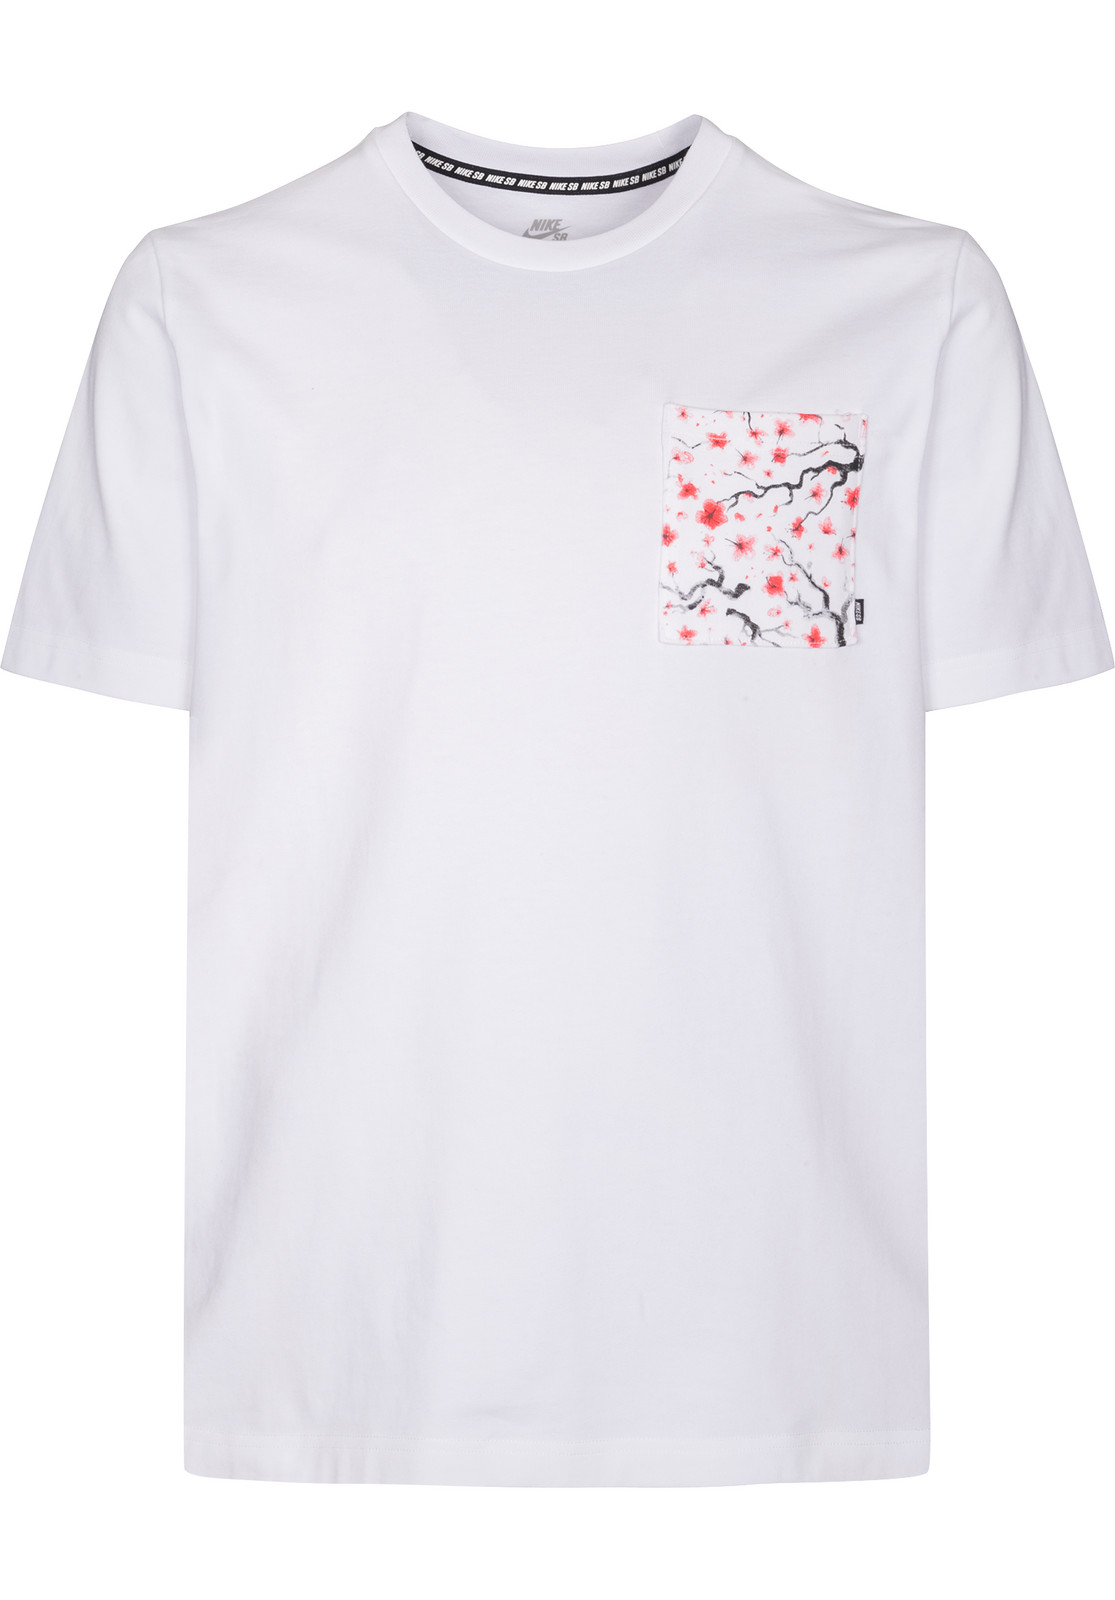 Titus_Muenchen_NikeSB_CherryBlossom_Pocket_T-Shirt_White.jpg